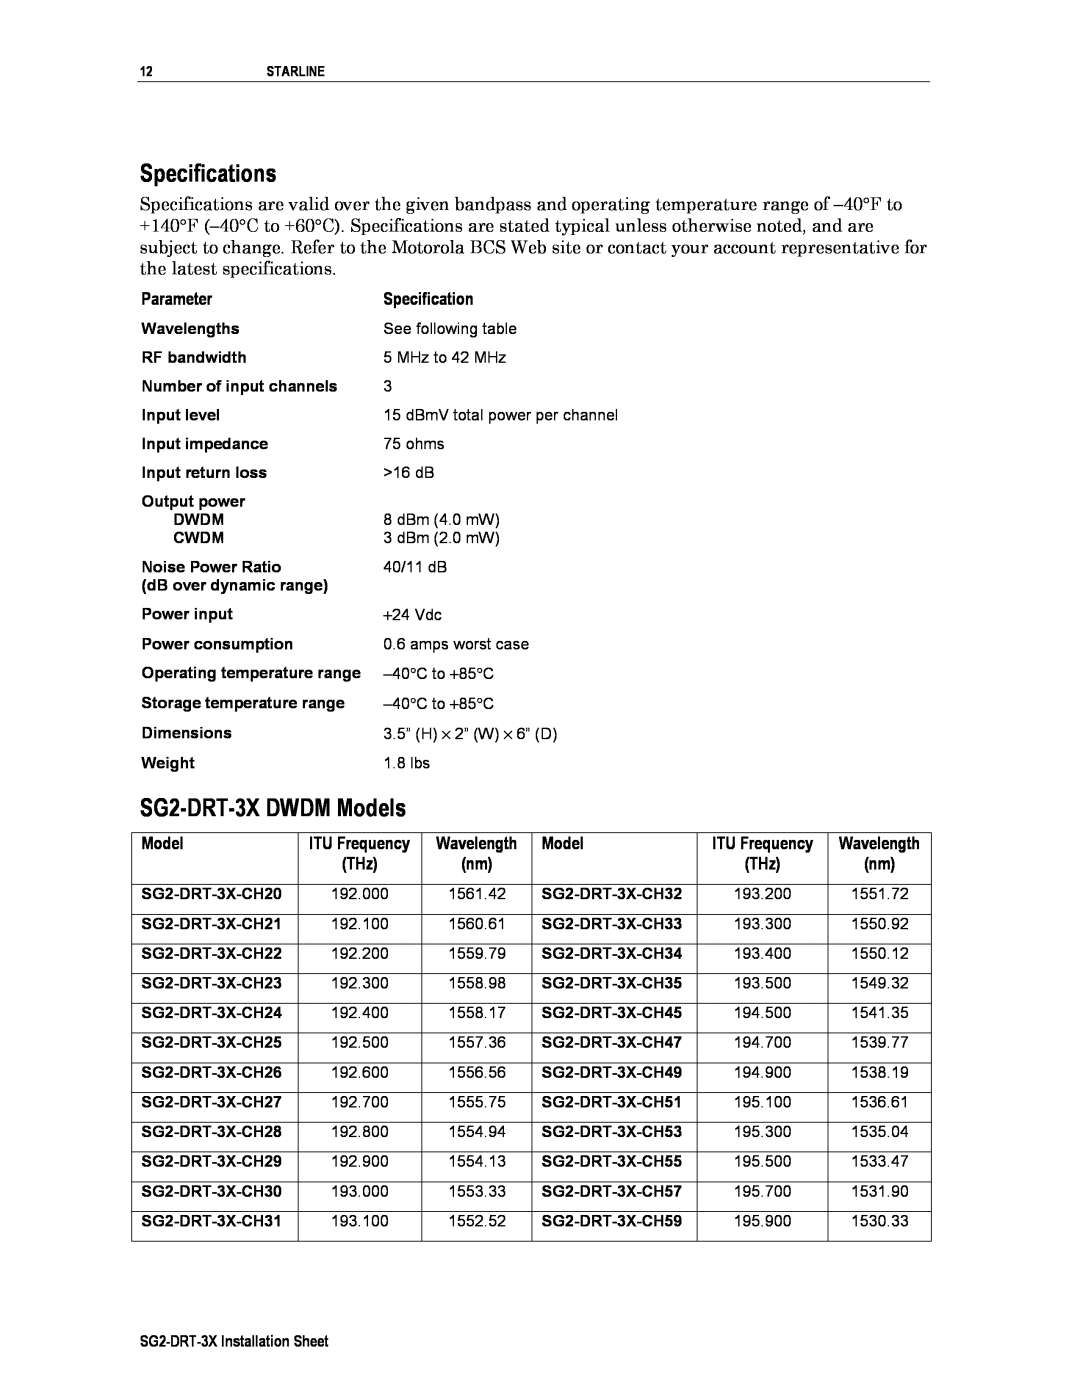 Cuisinart operation manual Specifications, SG2-DRT-3XDWDM Models, Parameter 